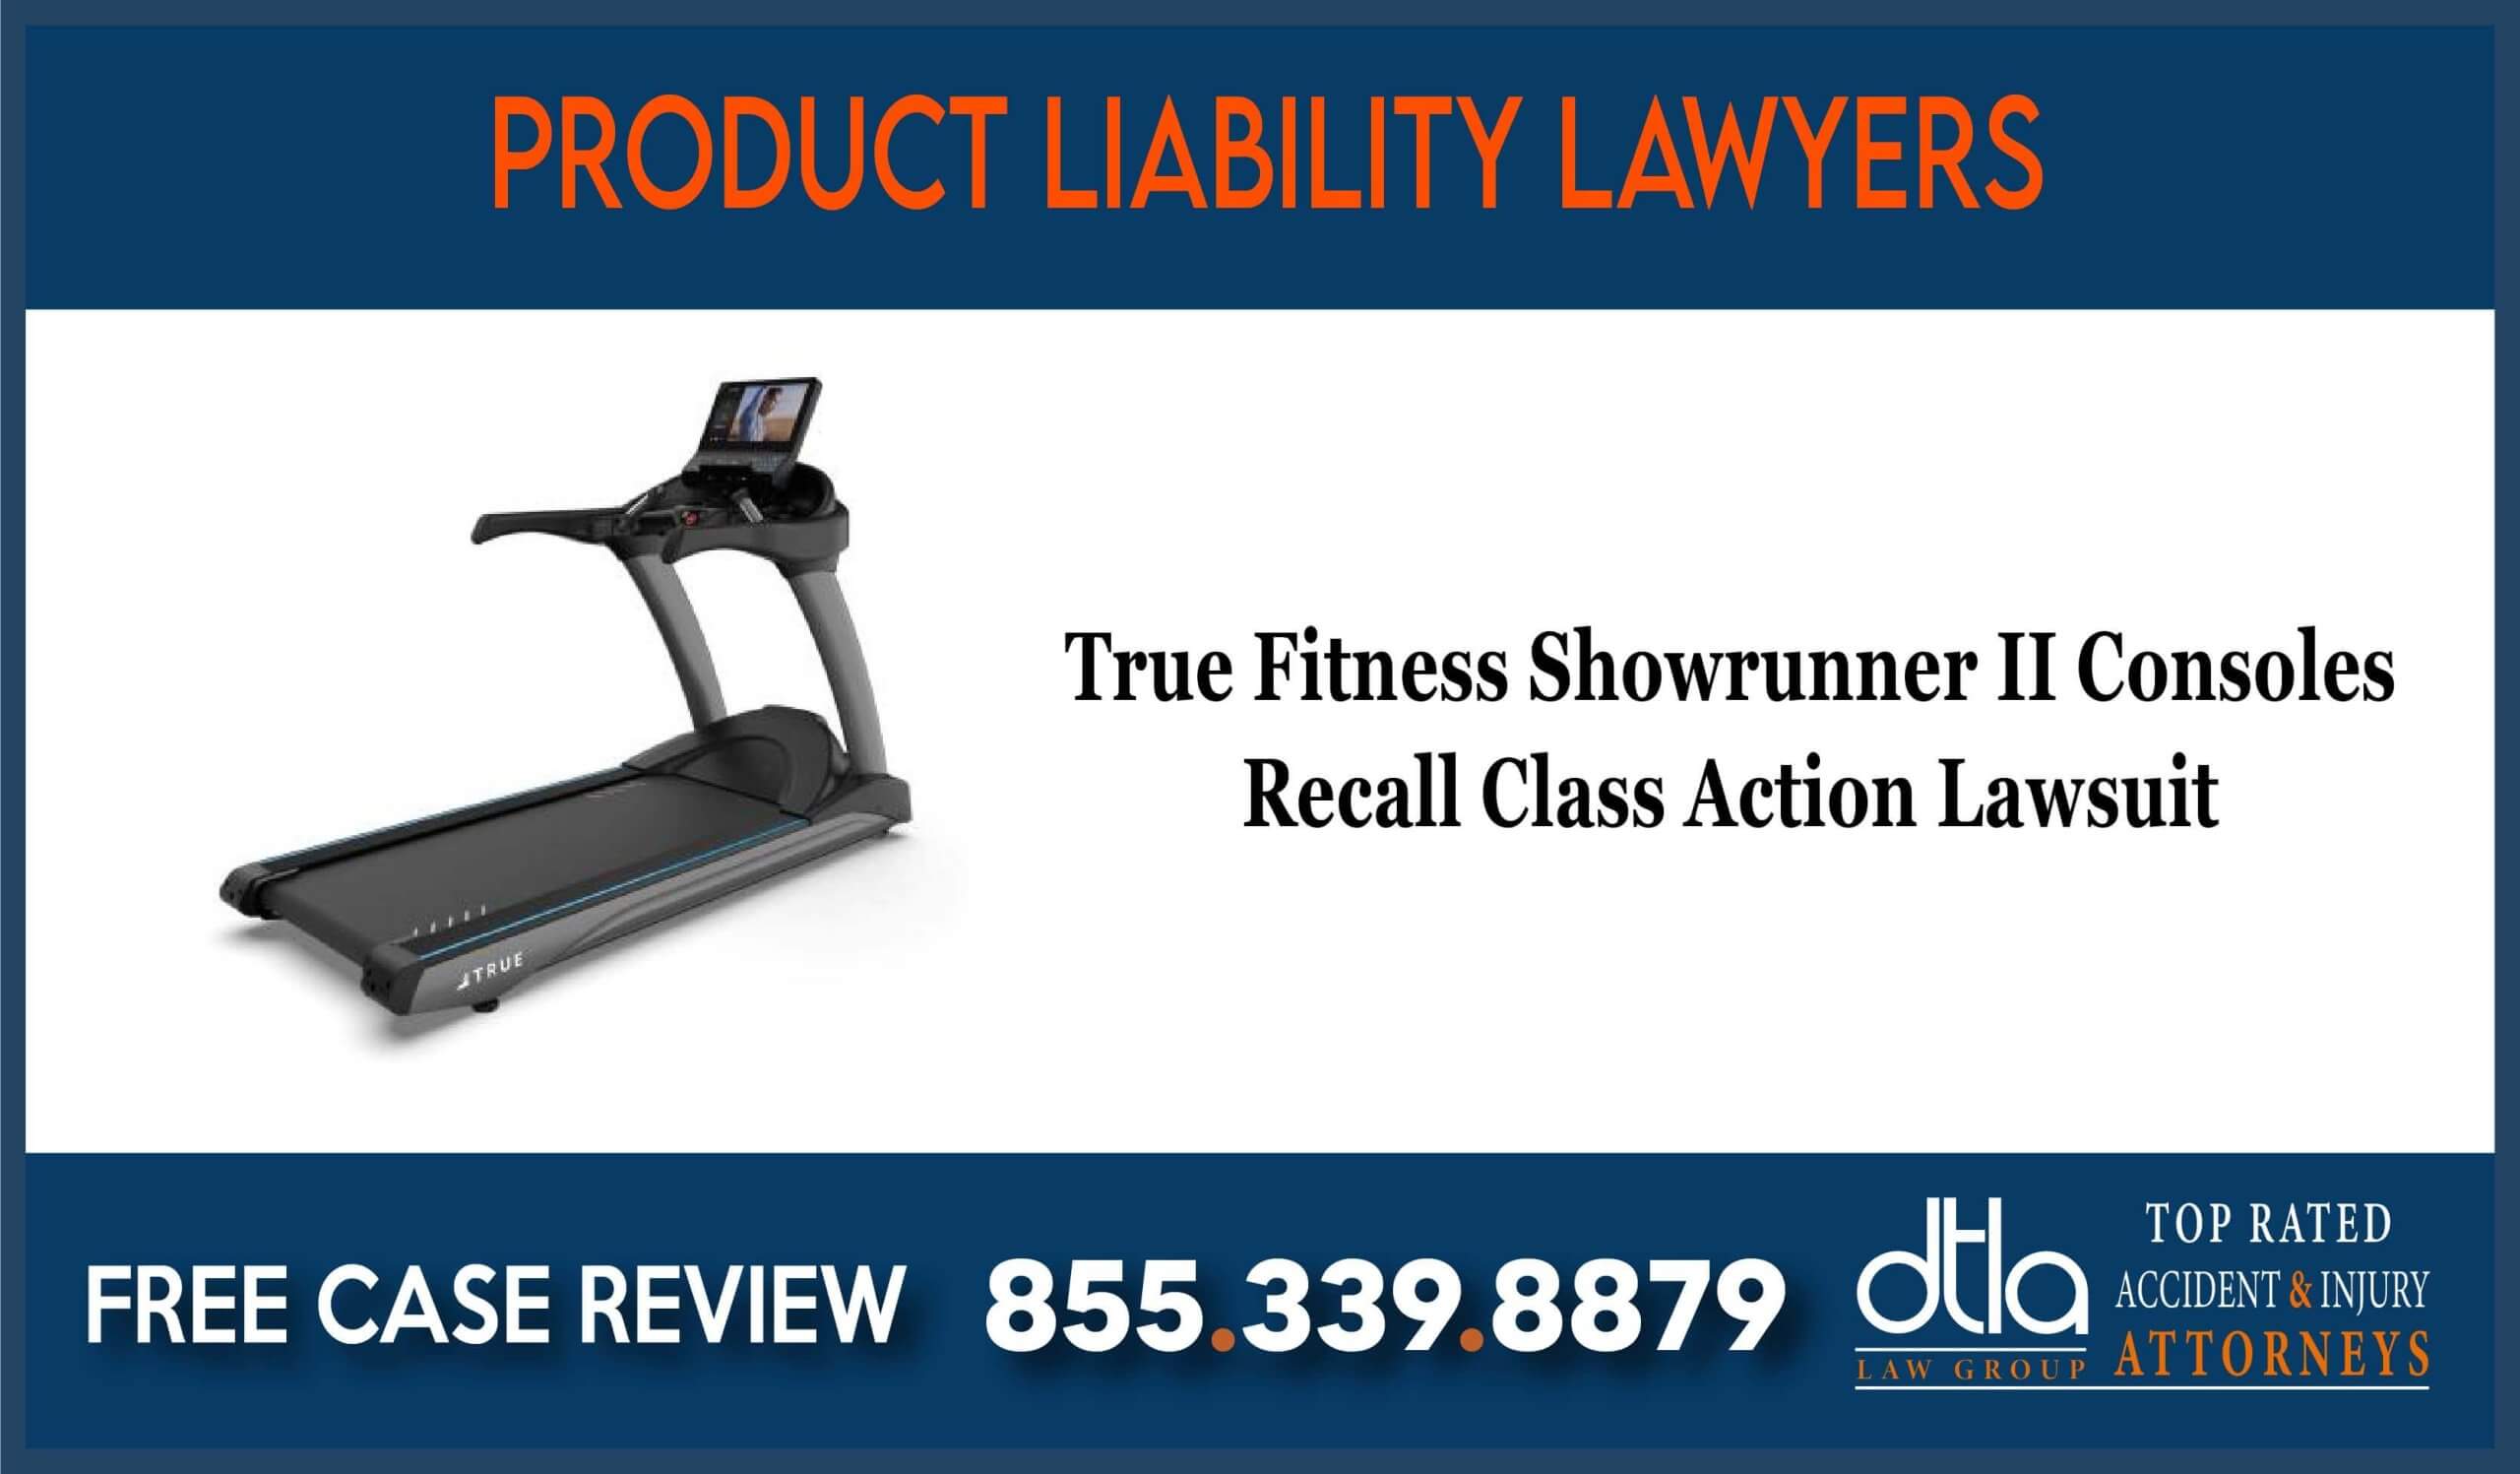 True Fitness Showrunner II Consoles Recall Class Action Lawsuit Lawsuit Lawsuit compensation lawyer attorney sue